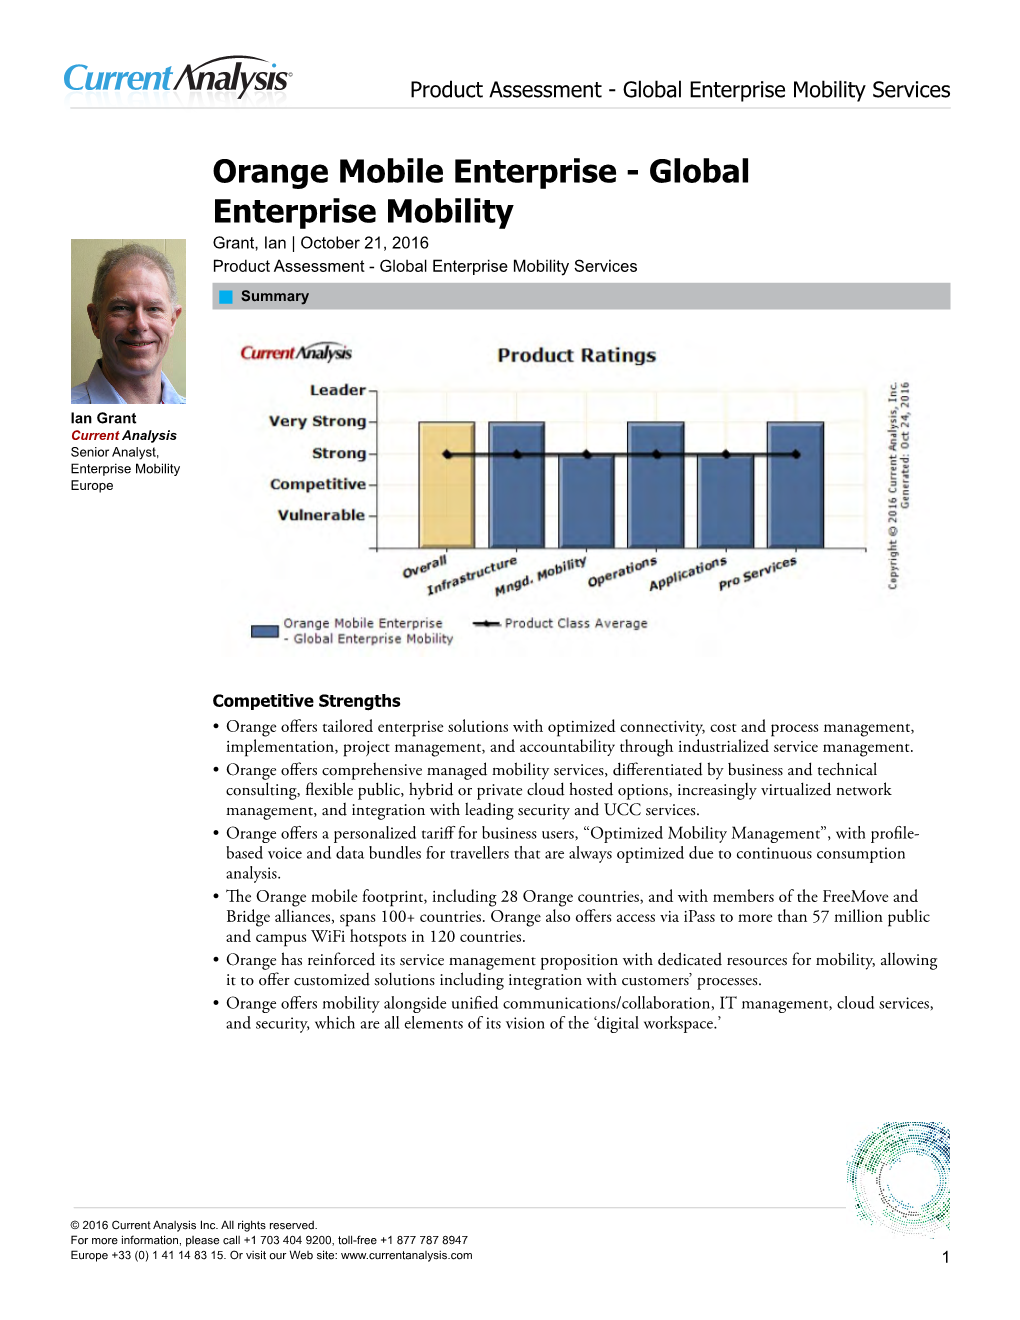 Global Enterprise Mobility Services